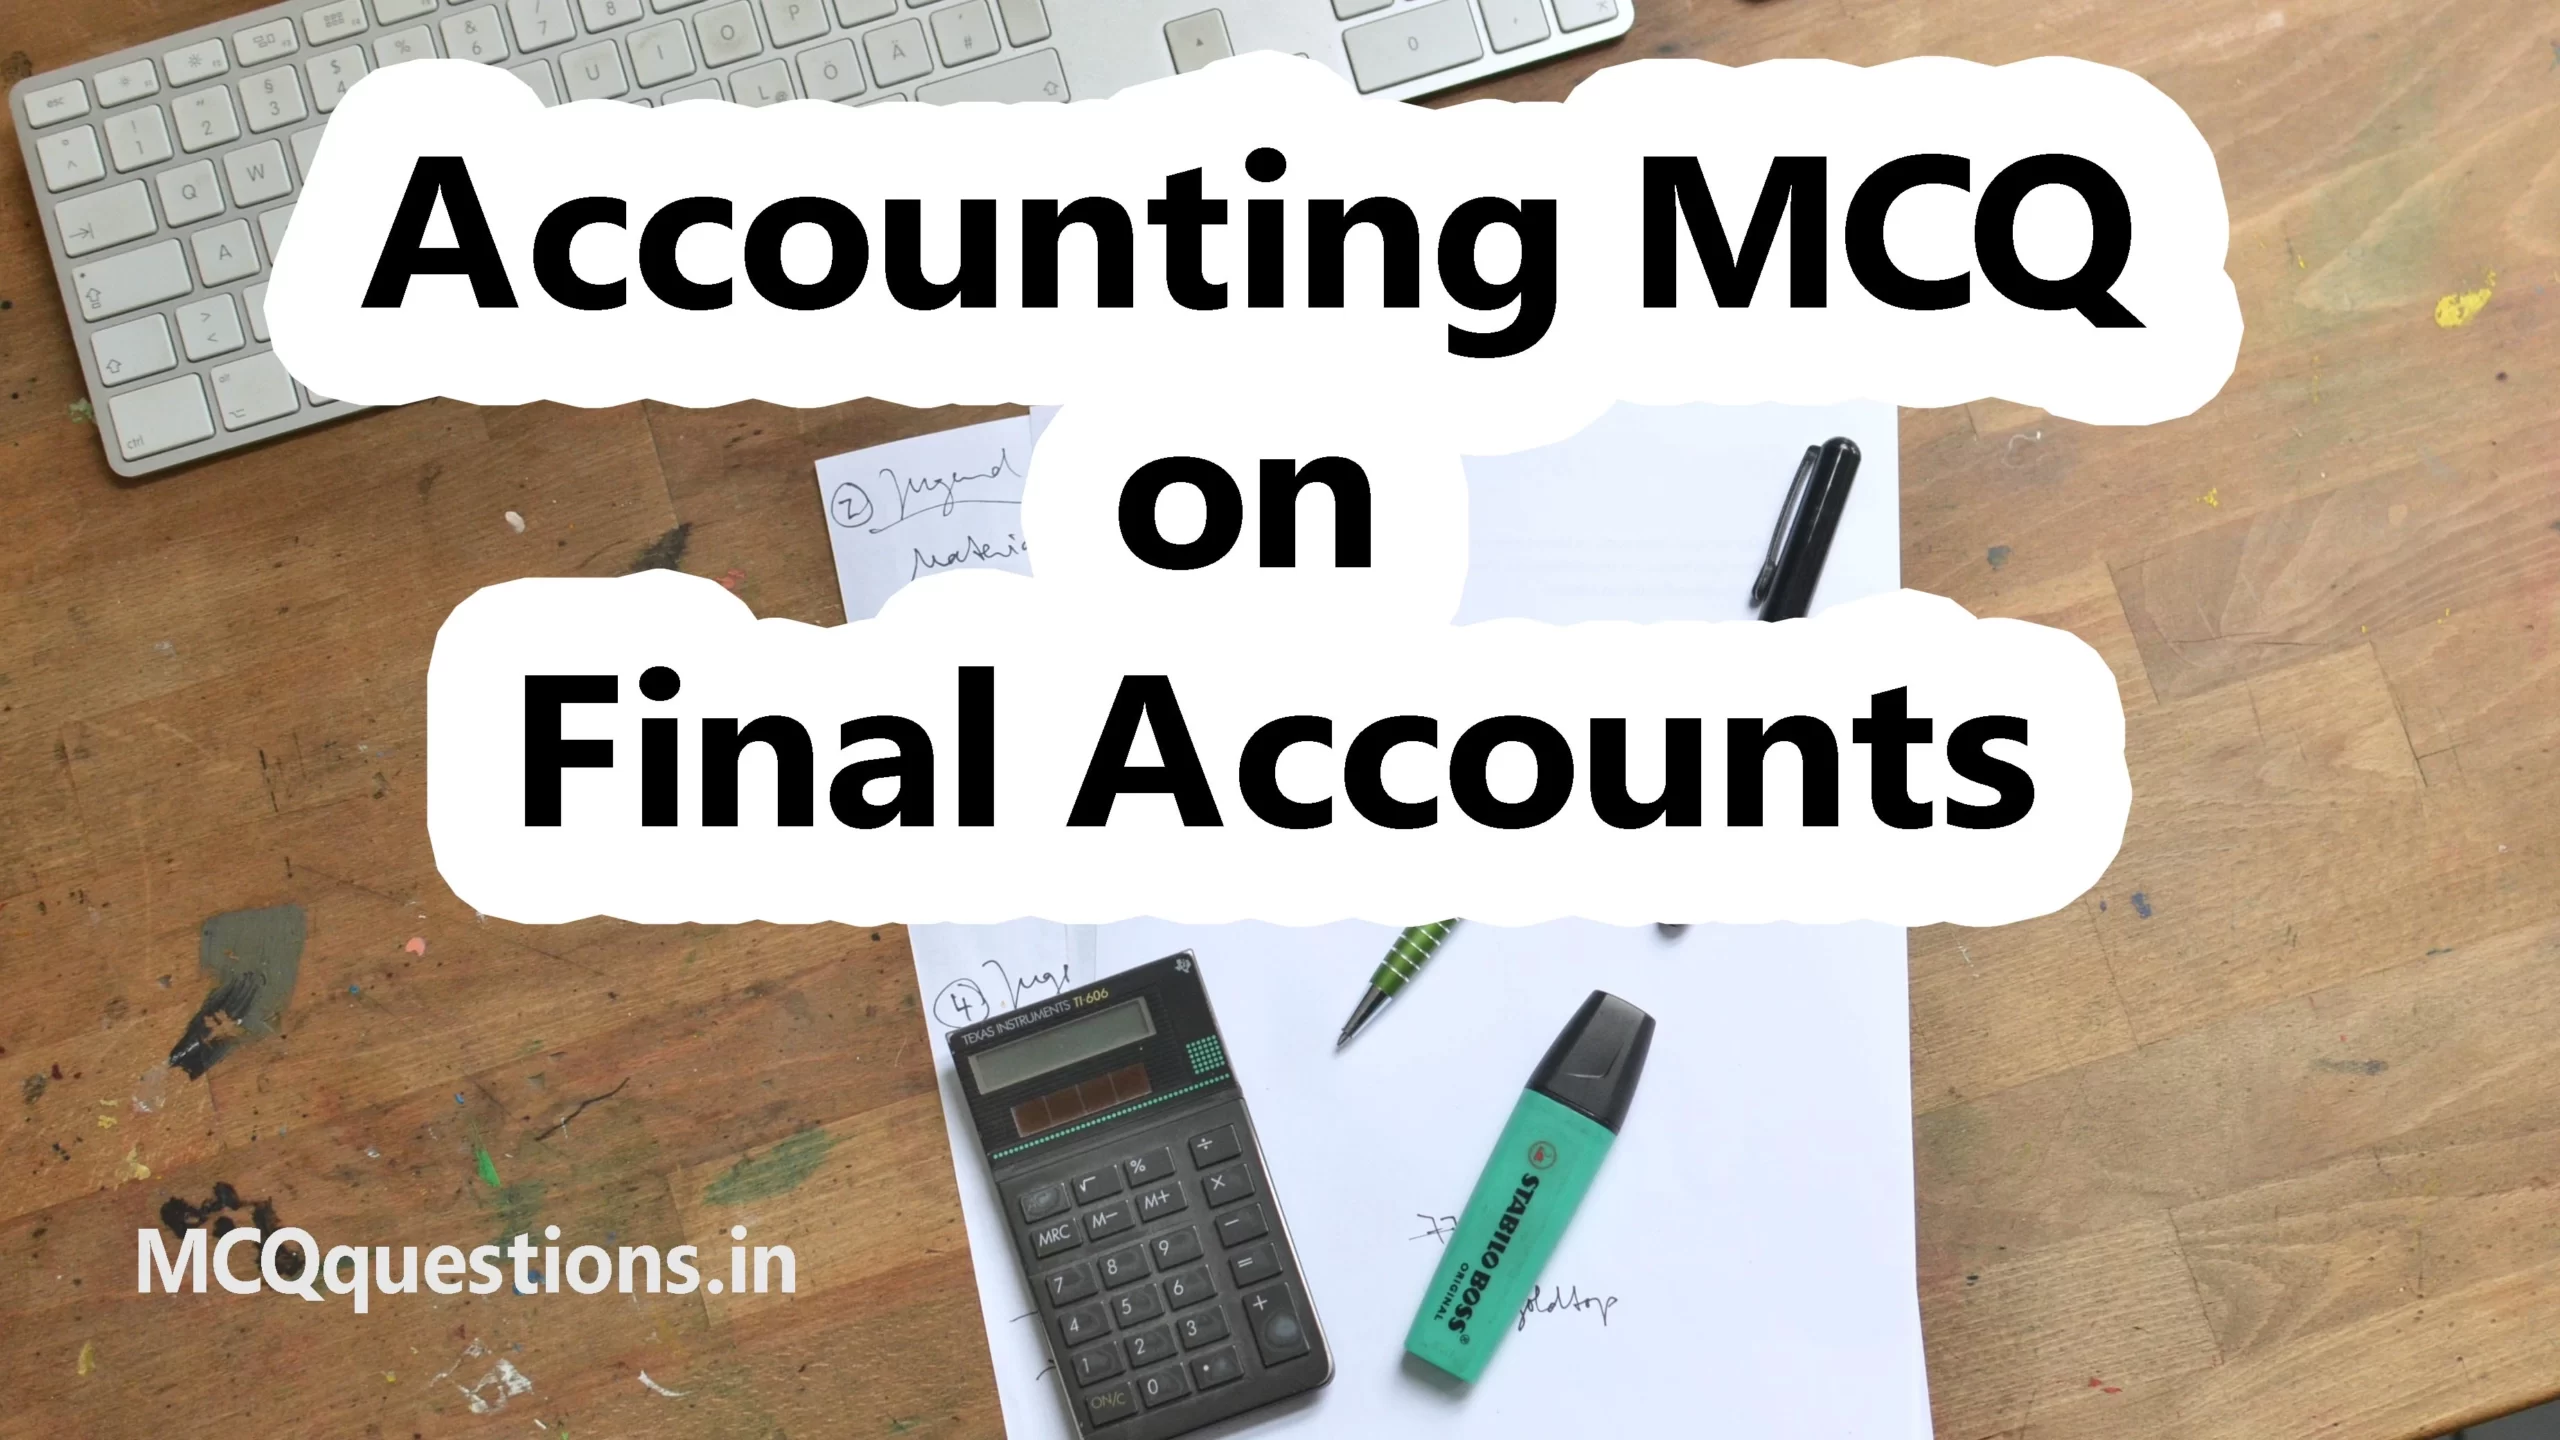 Accounting MCQ on Final Accounts